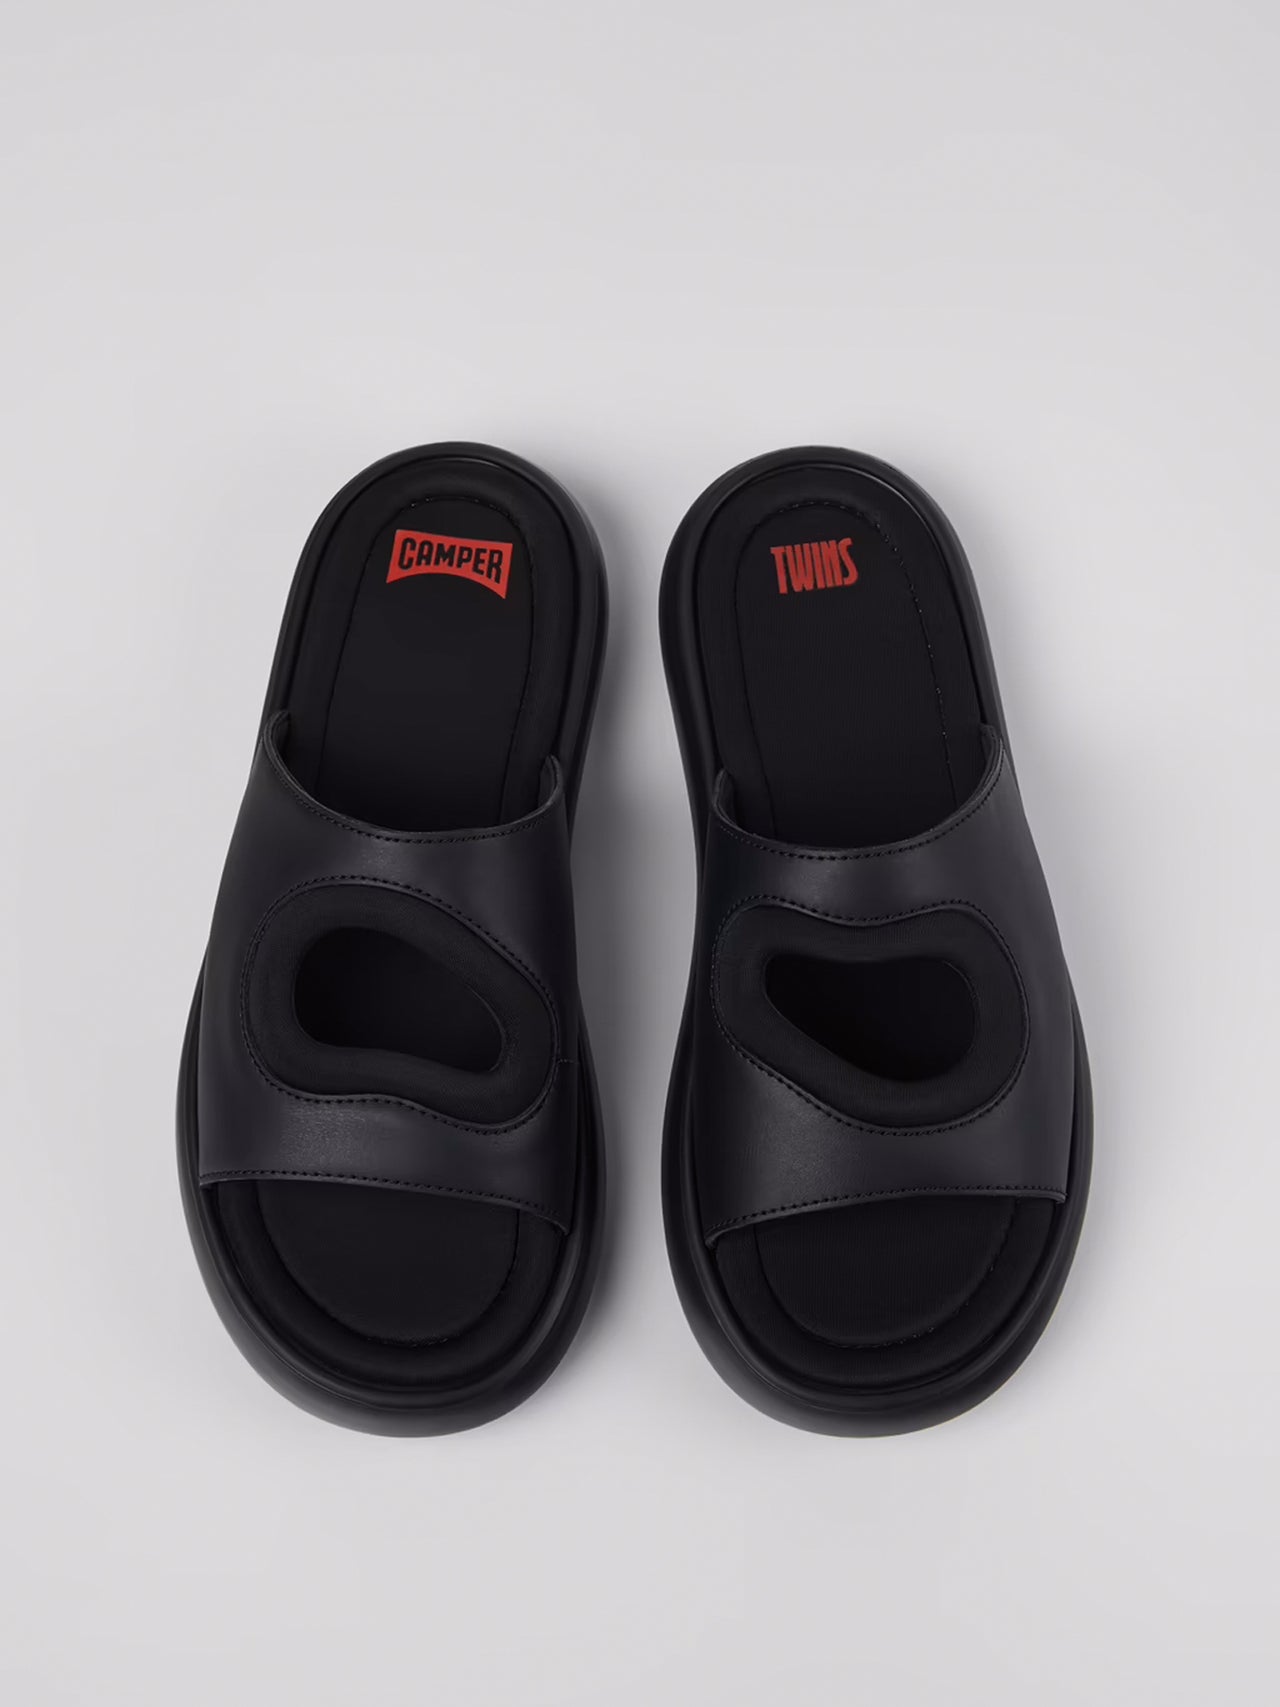 CAMPER / Twins Sandals (BLACK)